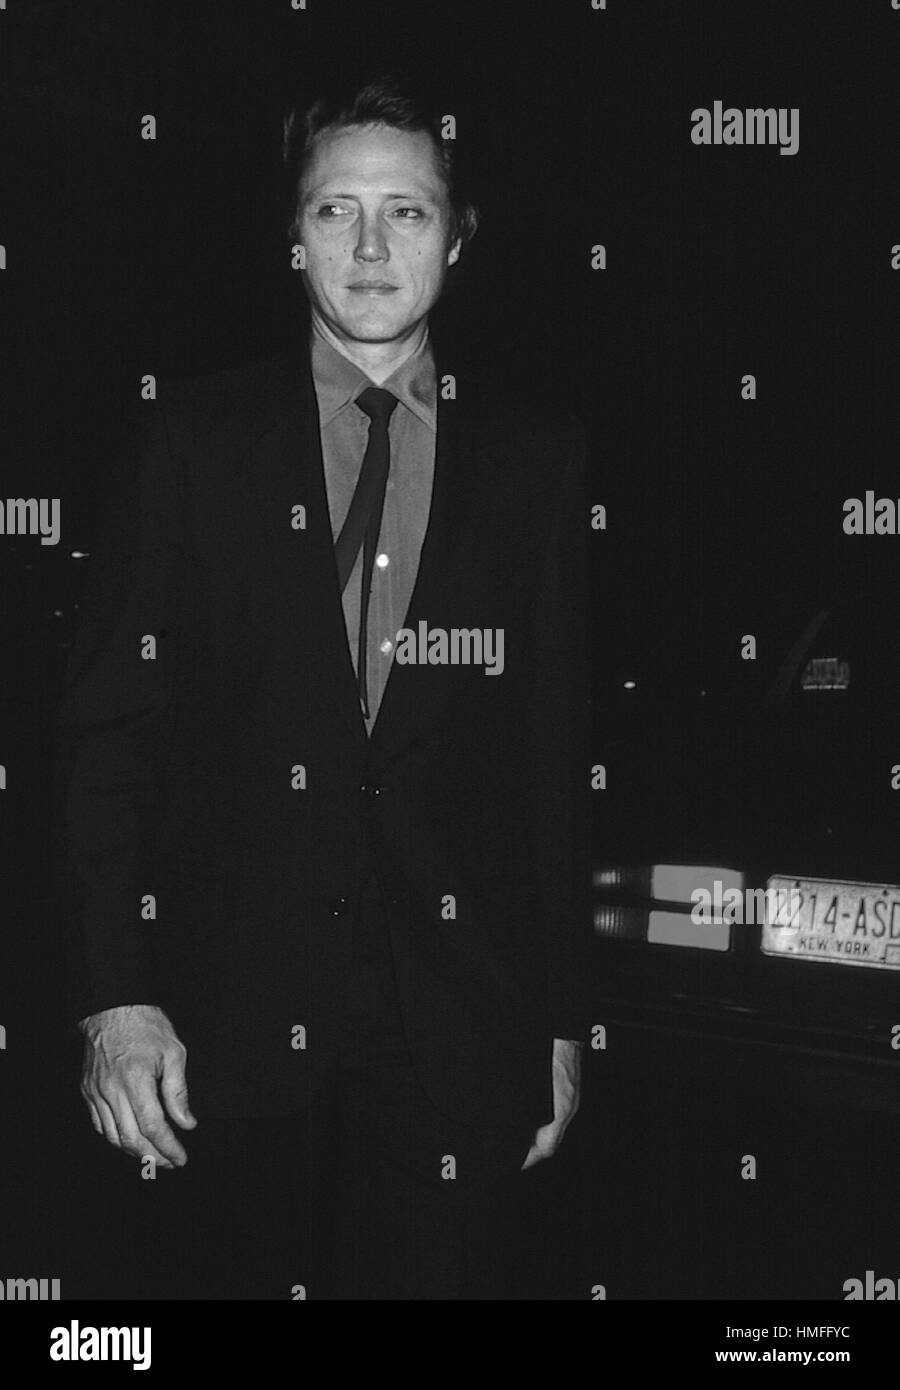 Christopher Walken in New York City on 9/1/84. Stock Photo